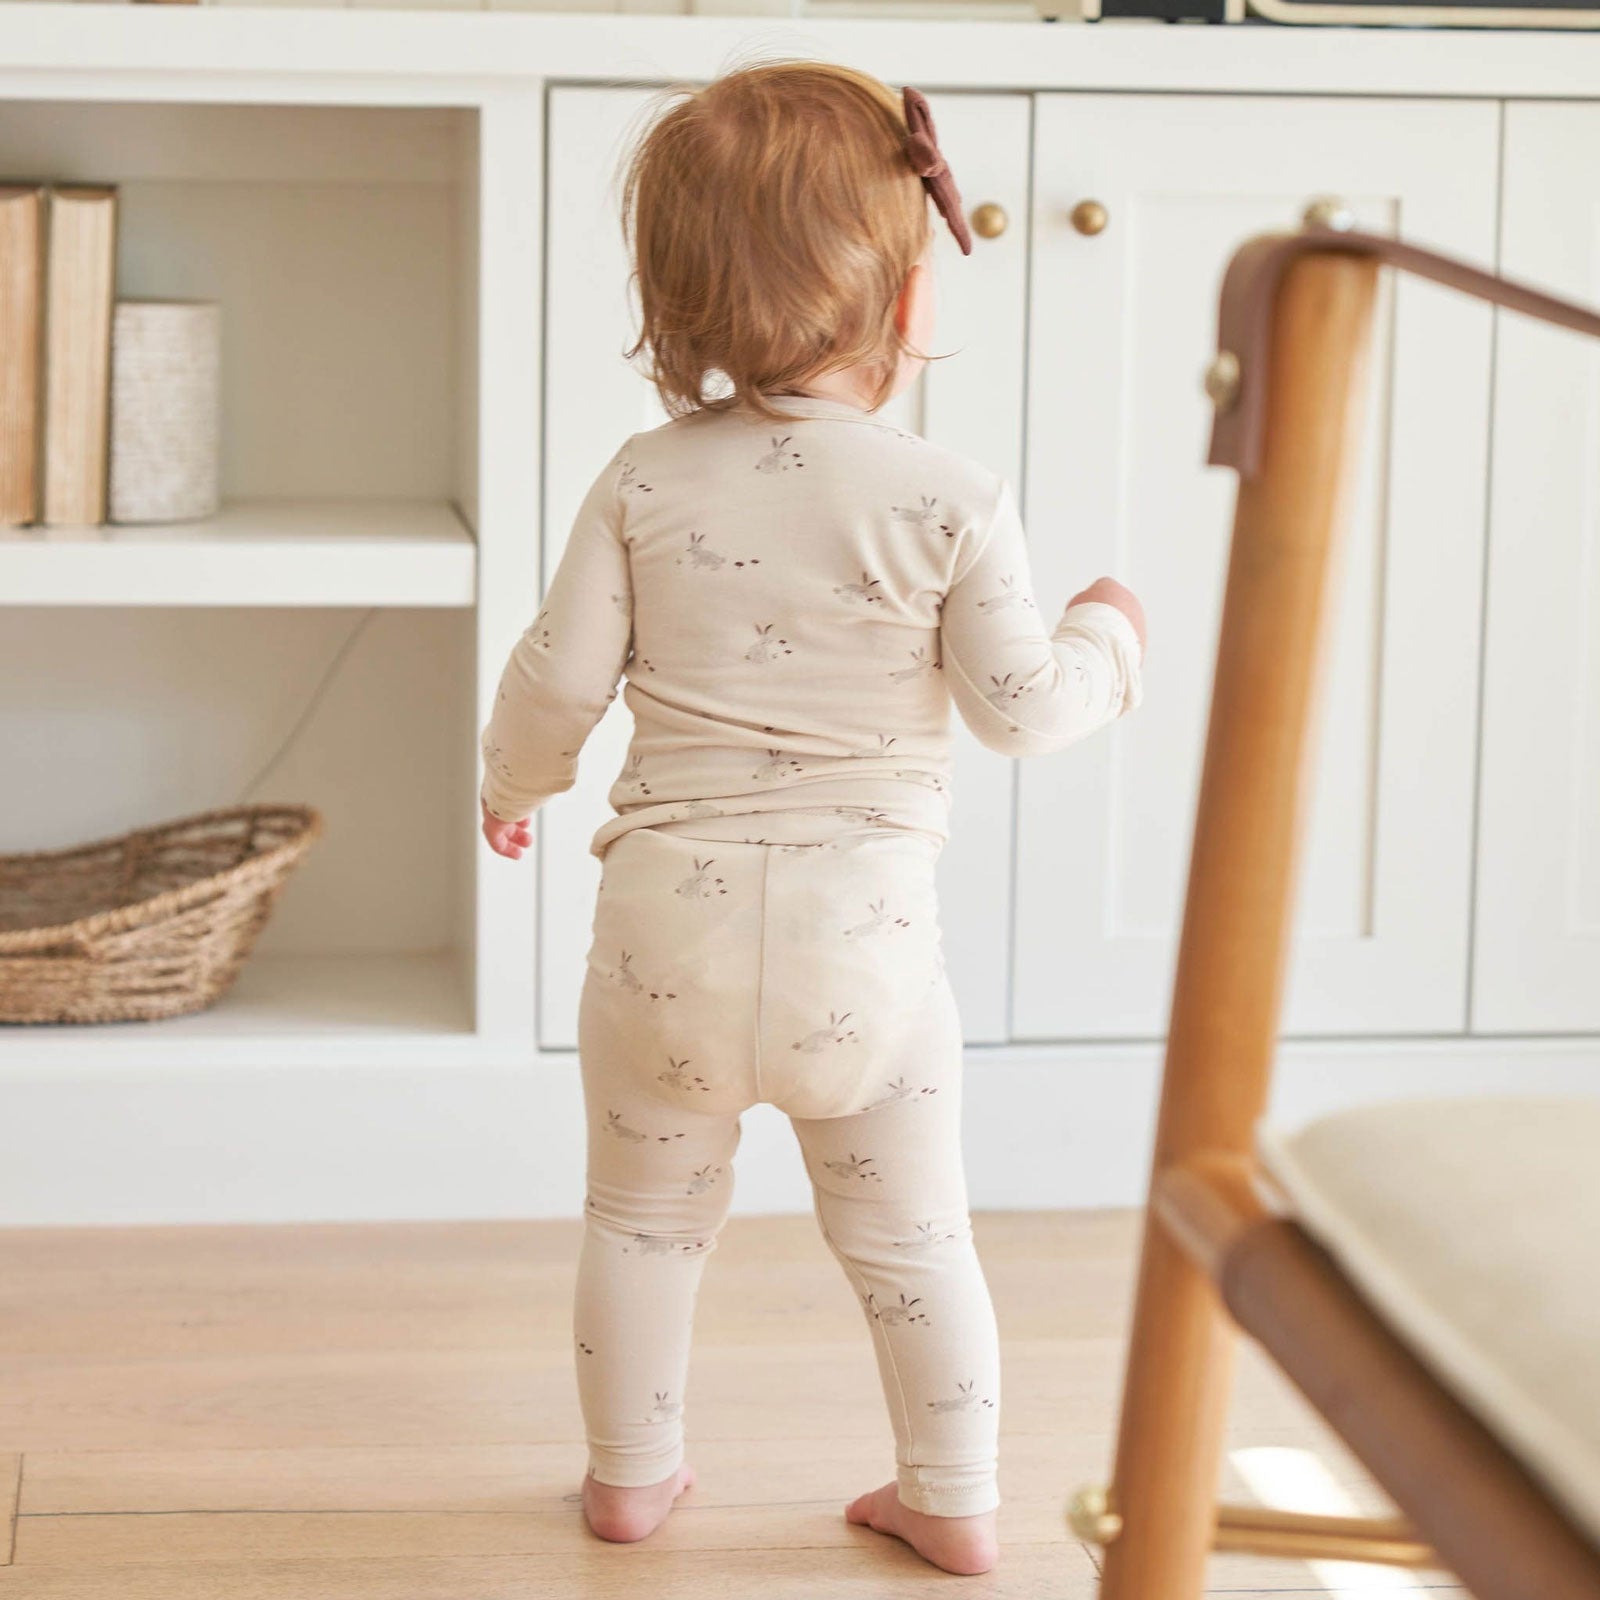 Toddler wearing Quincy Mae Bamboo Pajama Set - Bunnies - Natural